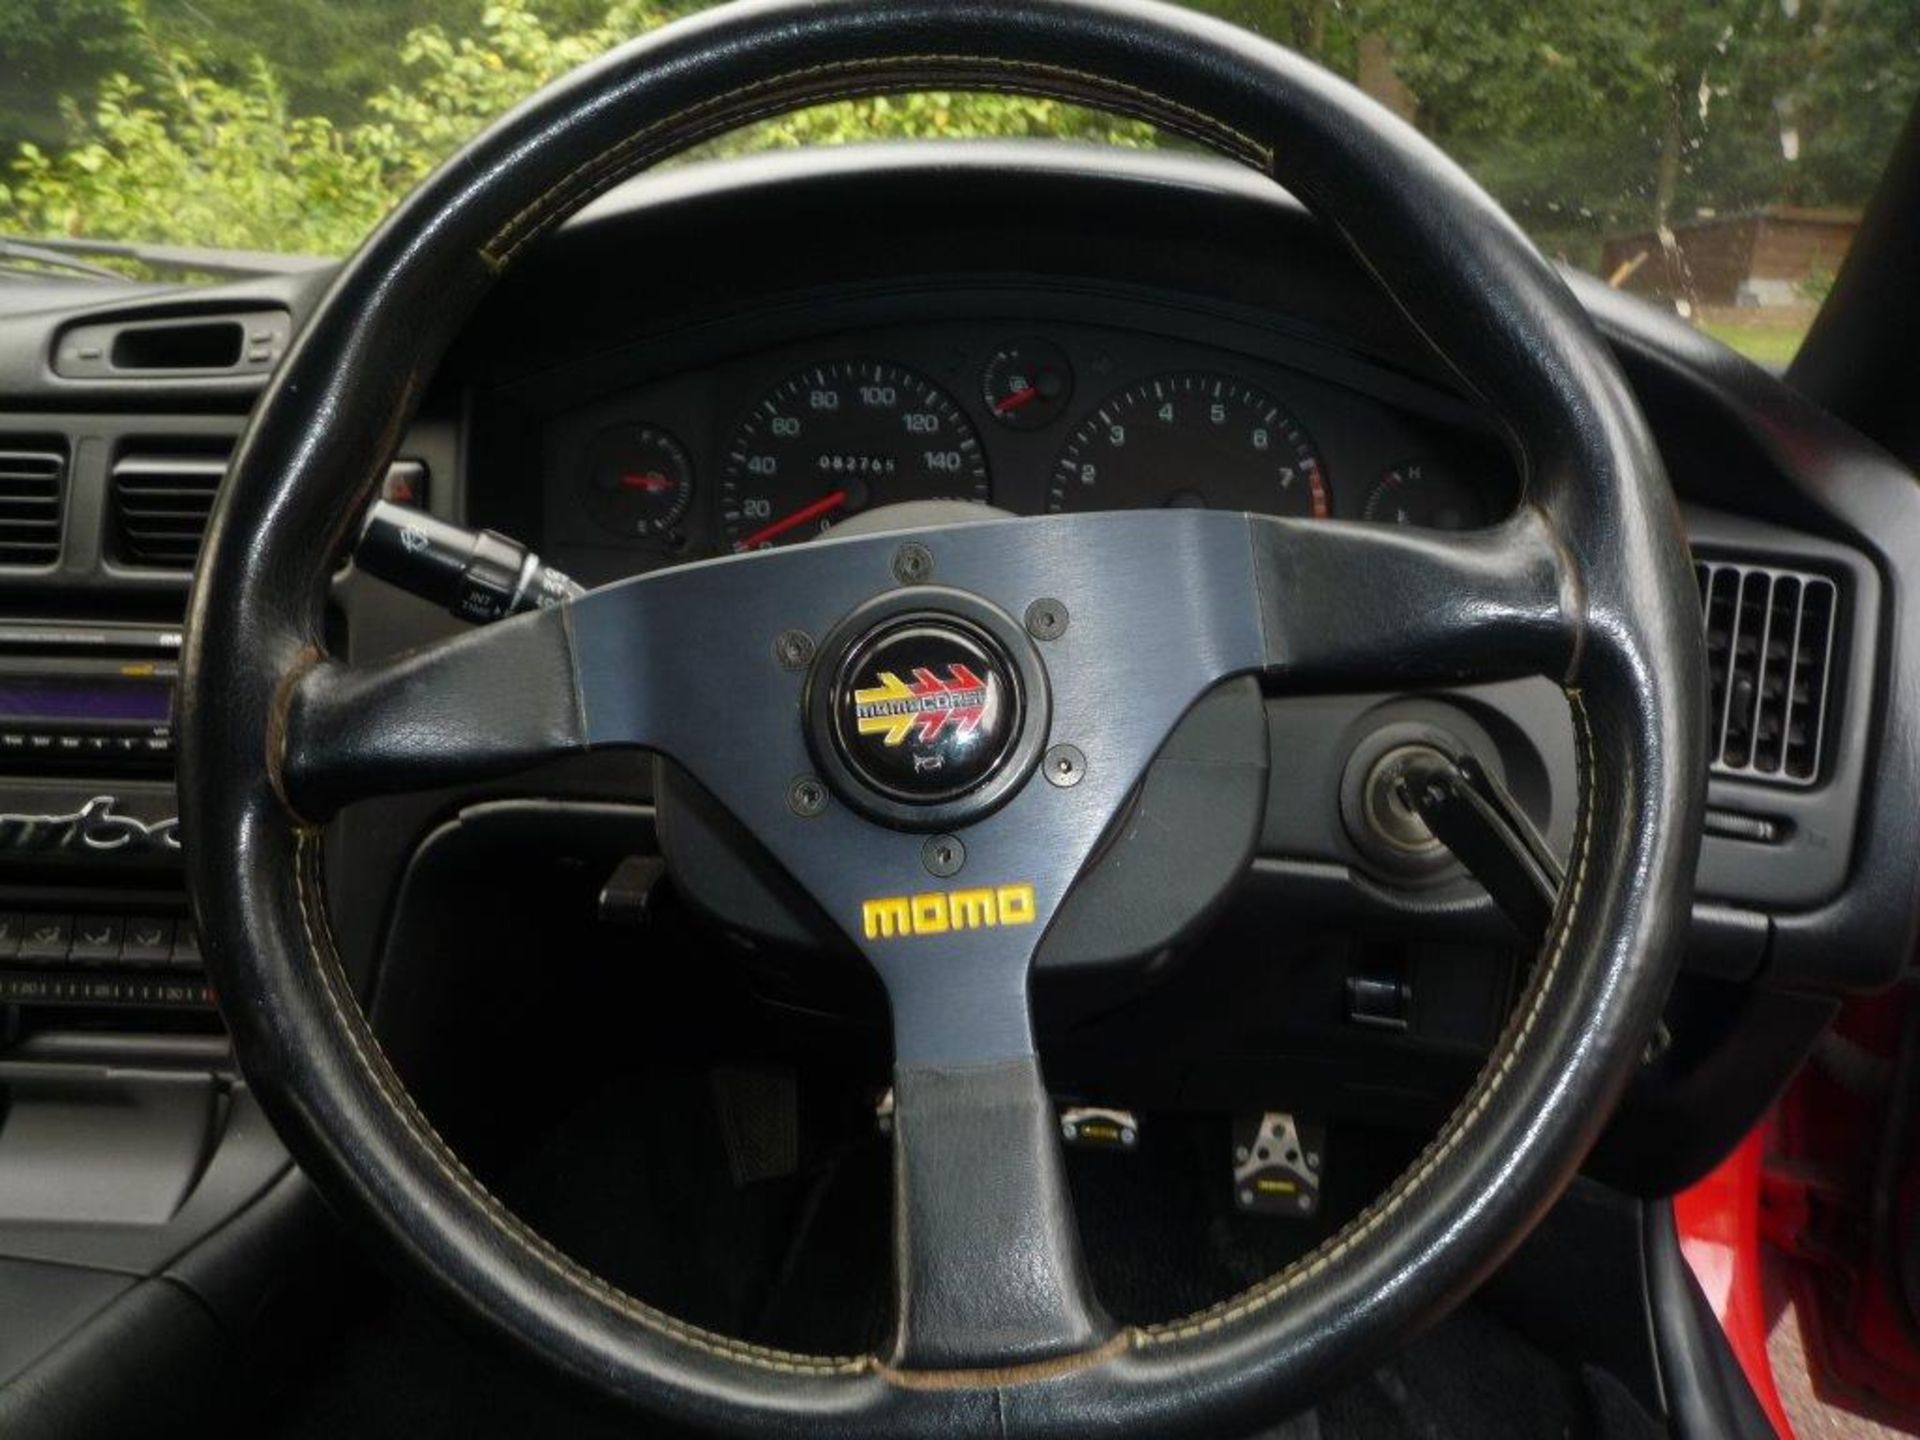 1993 Toyota MR2 Turbo - Image 9 of 21